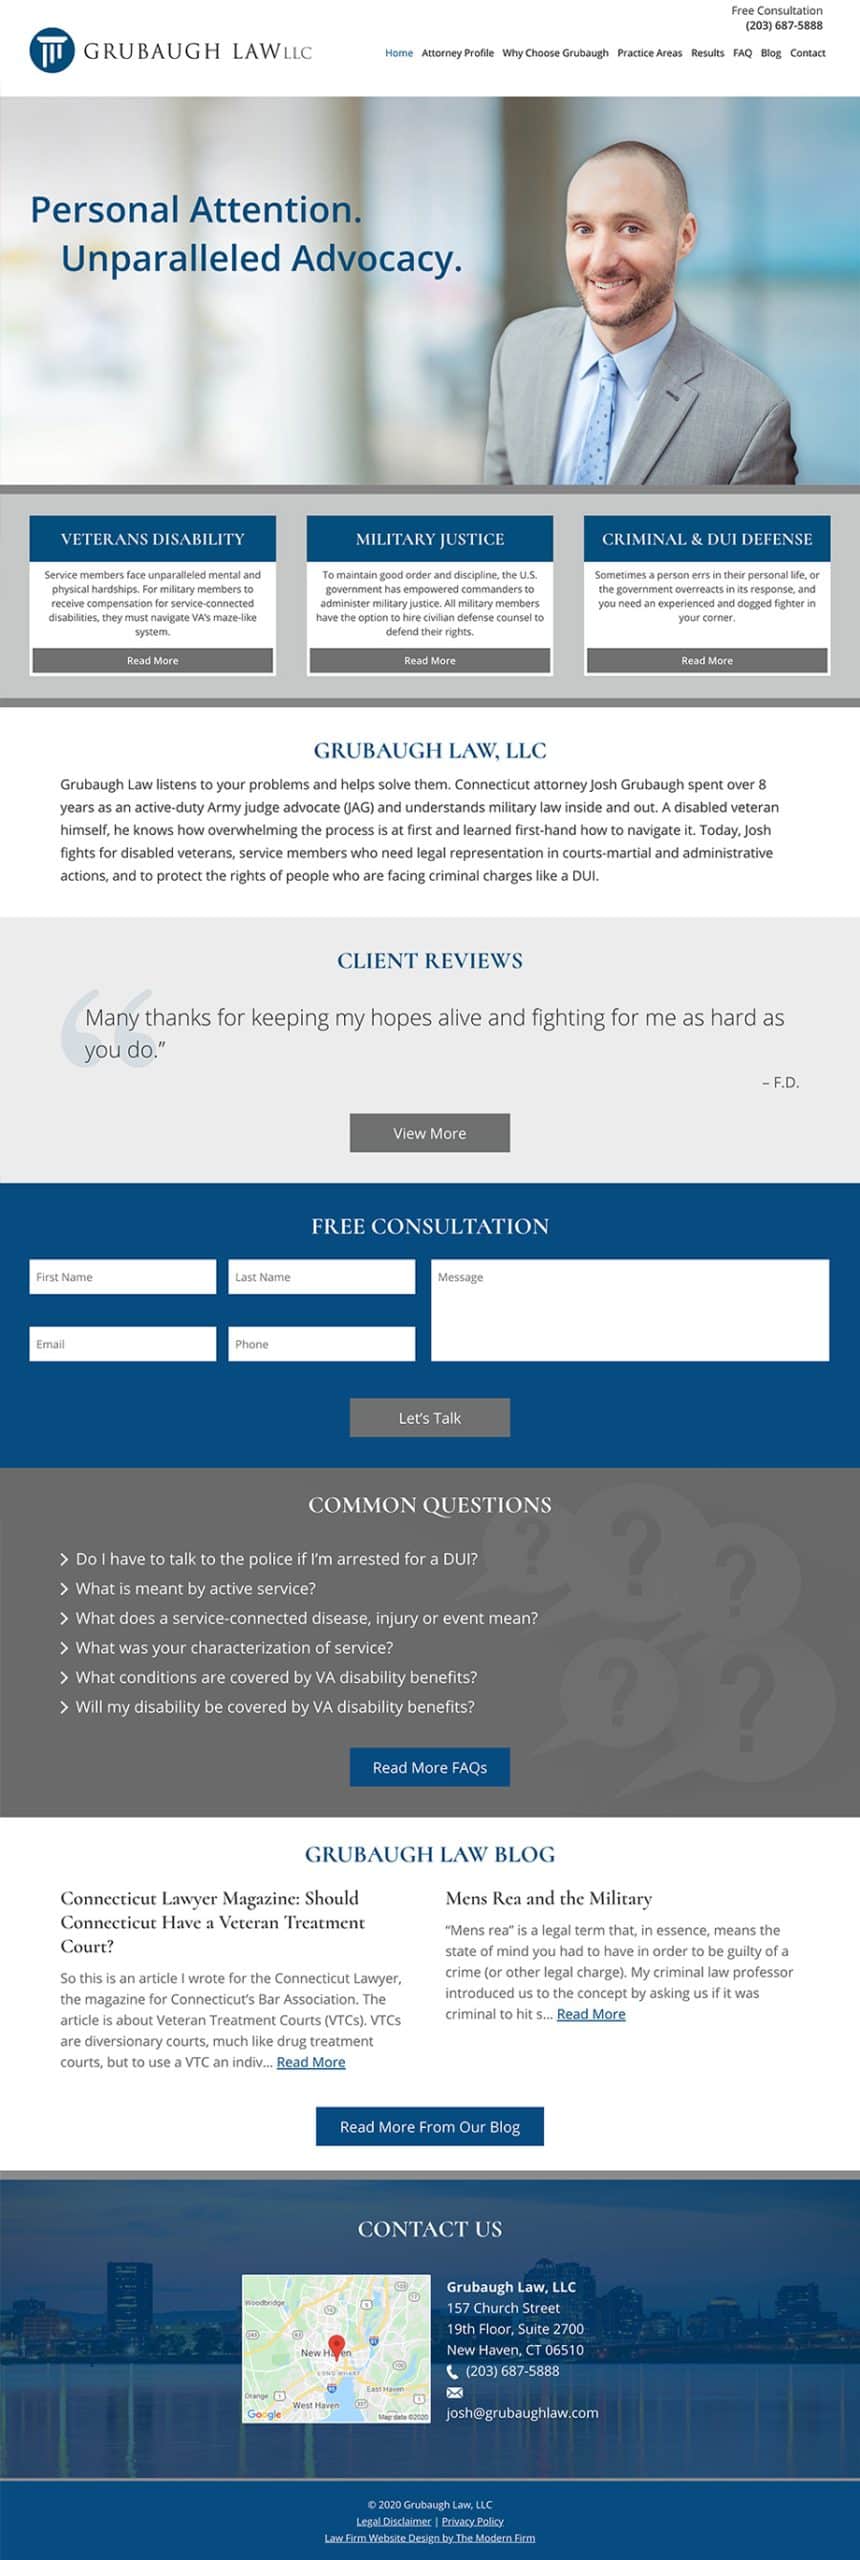 Law Firm Website Design for Grubaugh Law, LLC